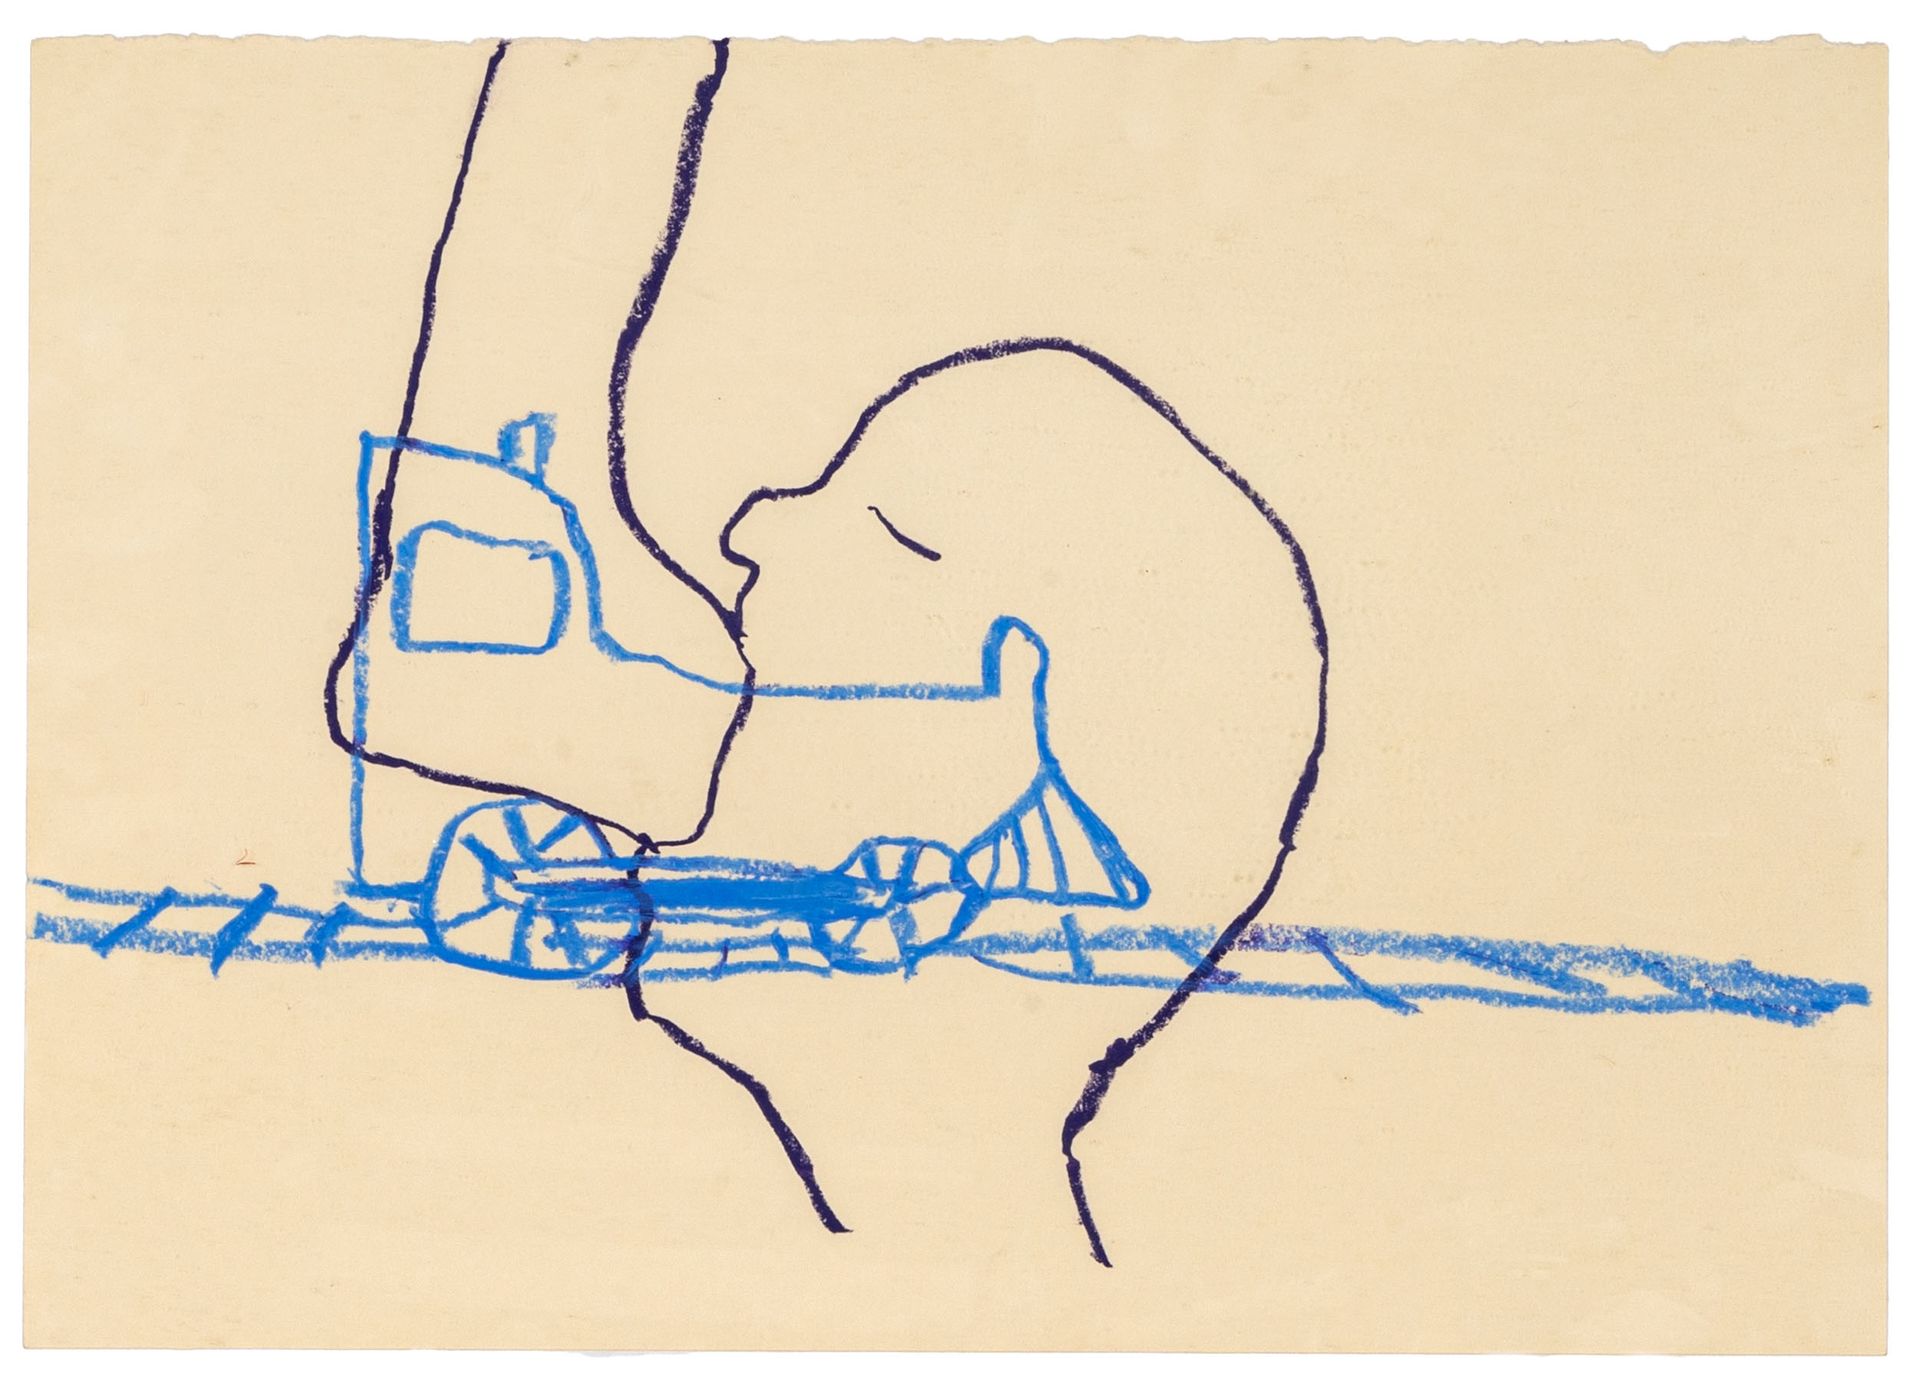 RYAN MENDOZA RYAN MENDOZA
(1971)
Unbetitelt
Wachsmalkreide auf Papier
35 x 50 cm&hellip;